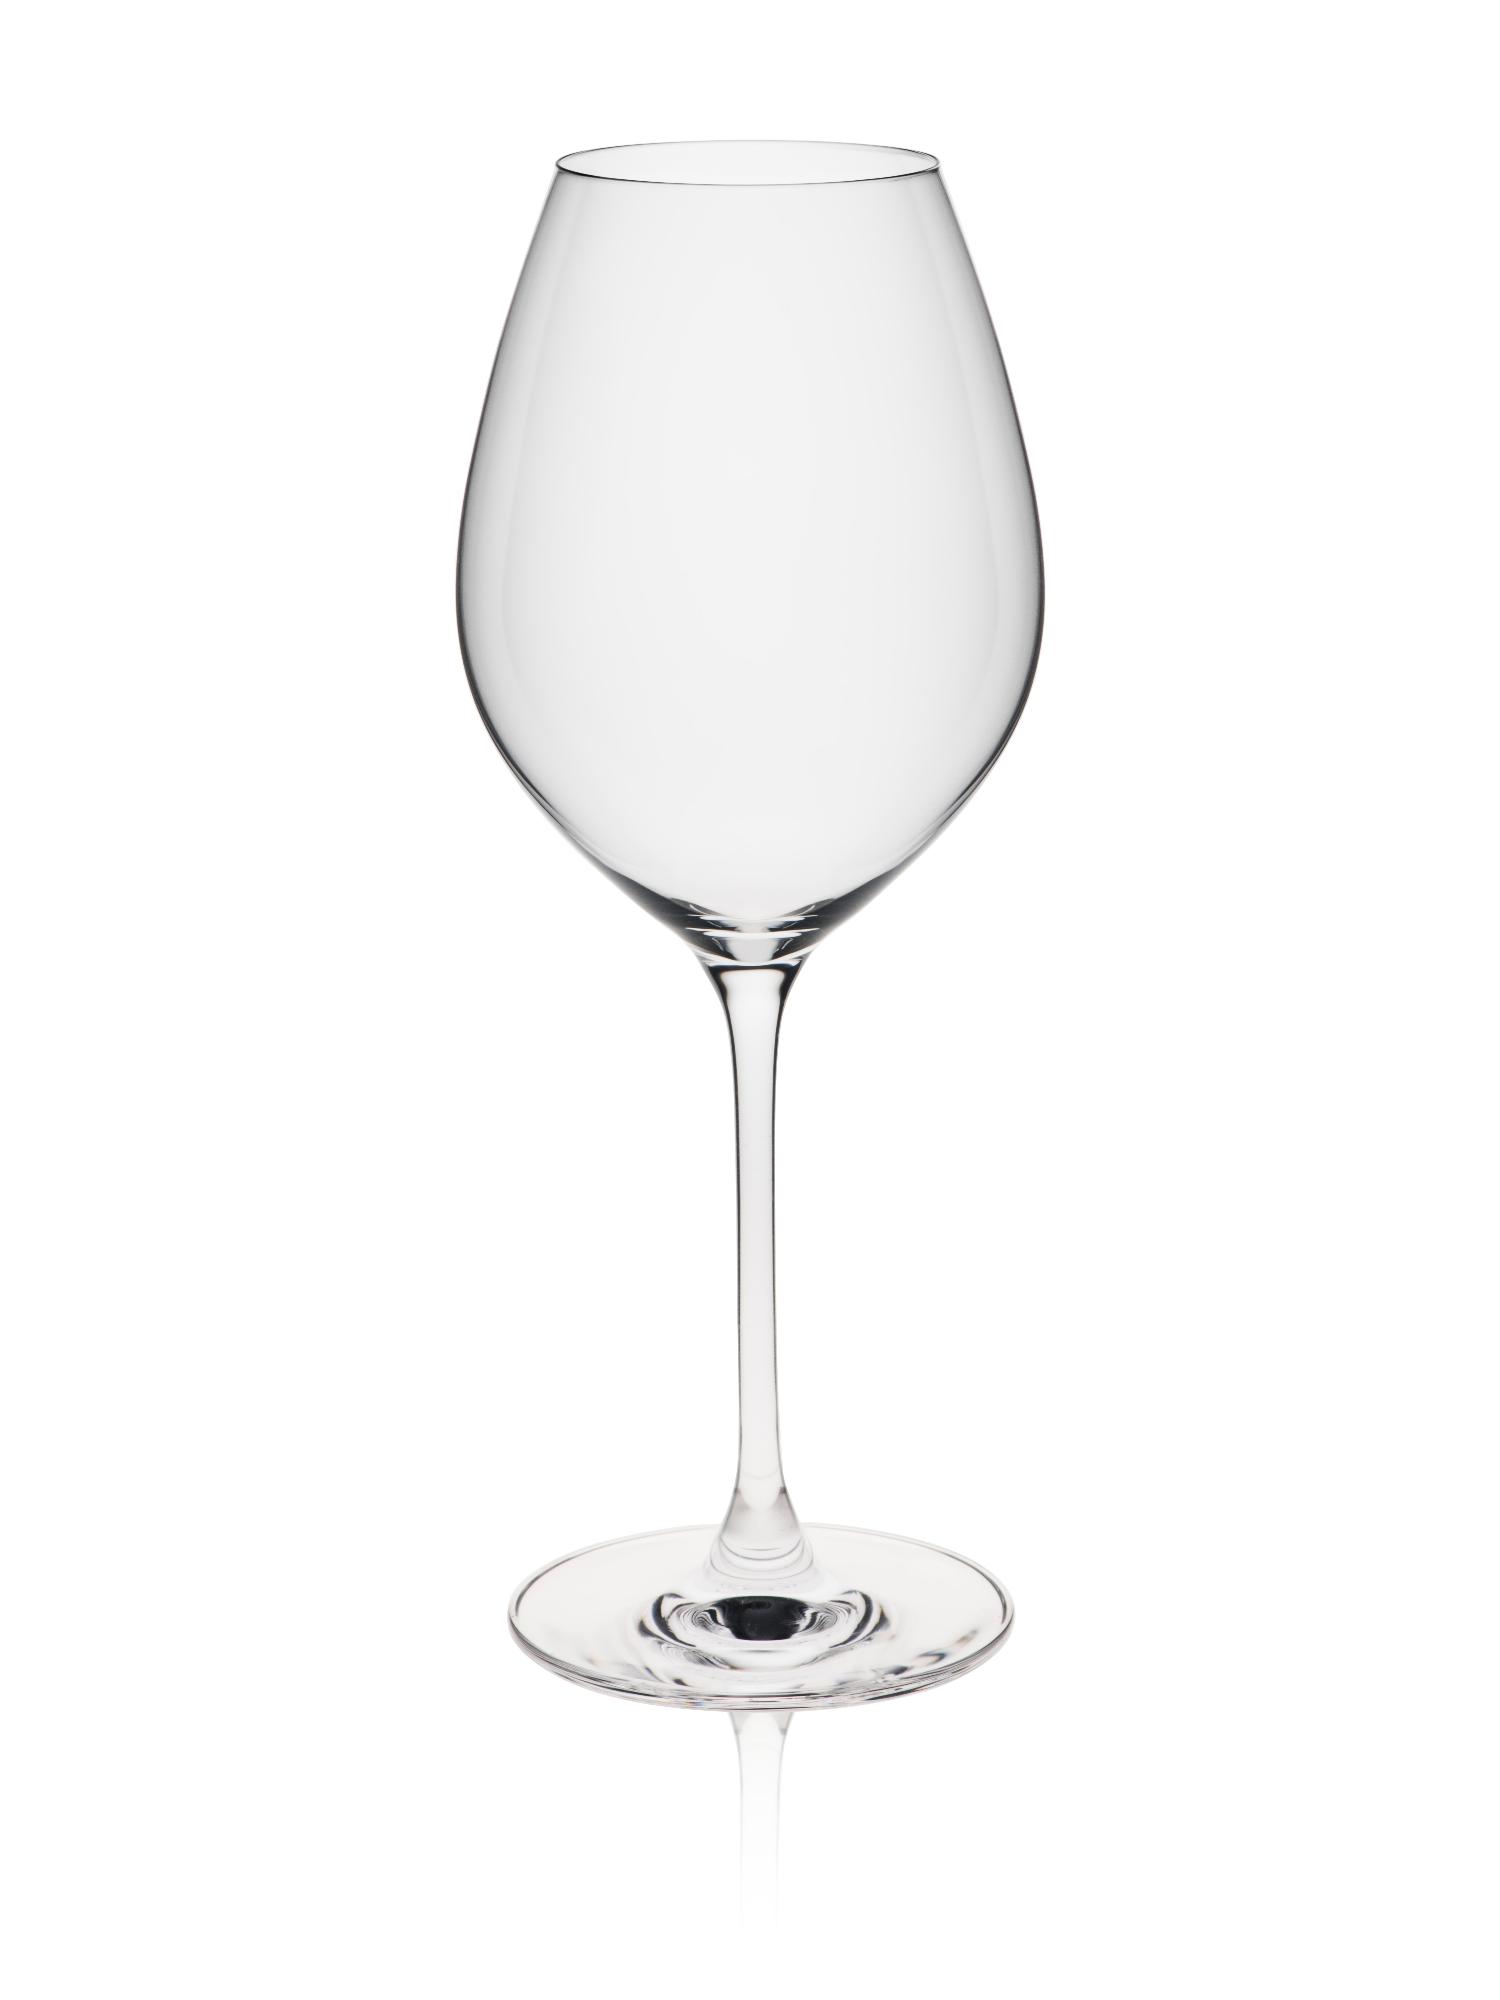 Le Vin Chardonnay glass, 480ml